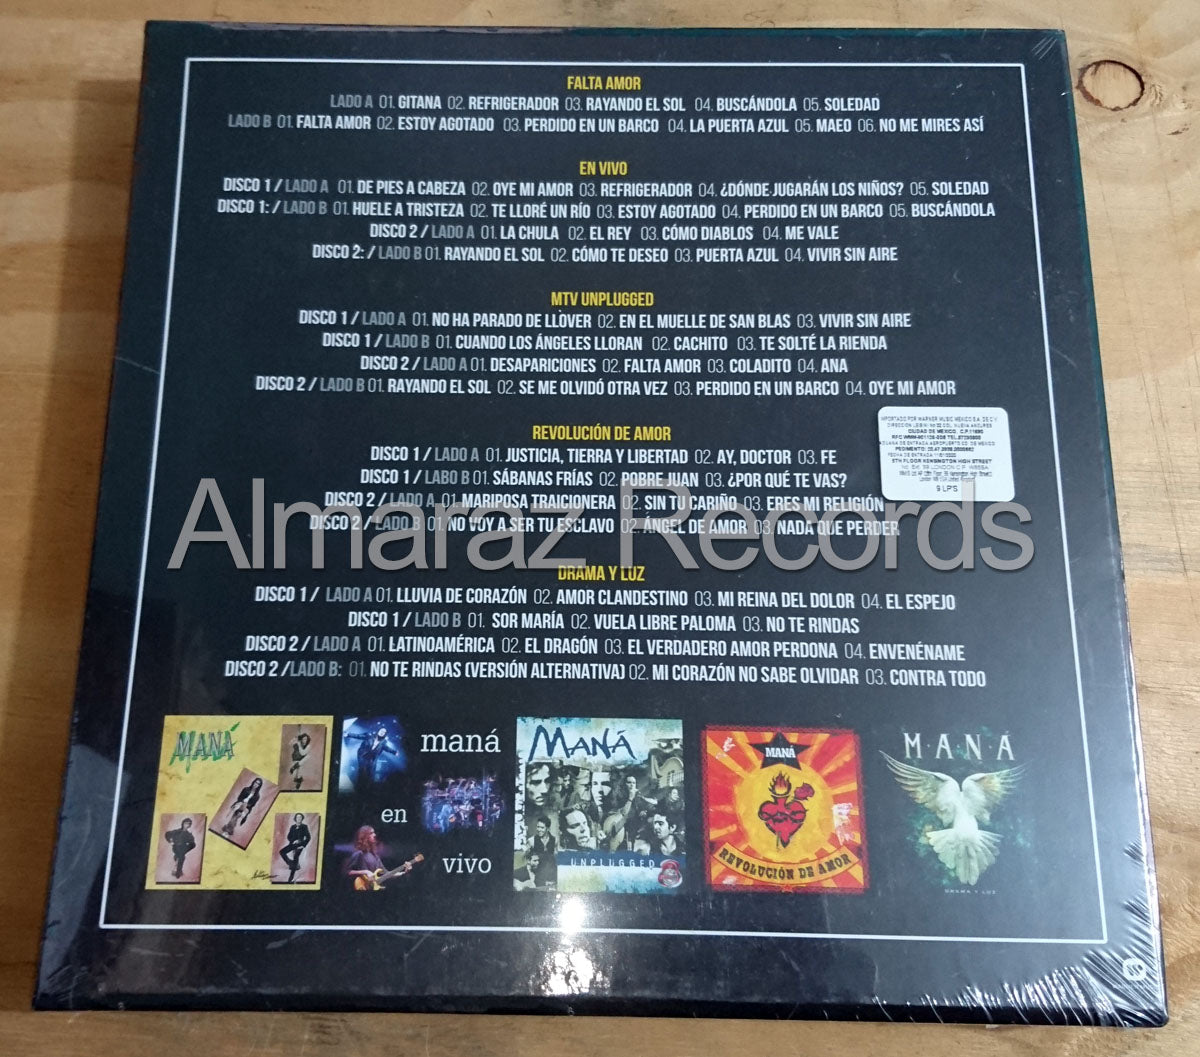 Mana Vol. 1 Remastered Vinyl Collection LP Box Set